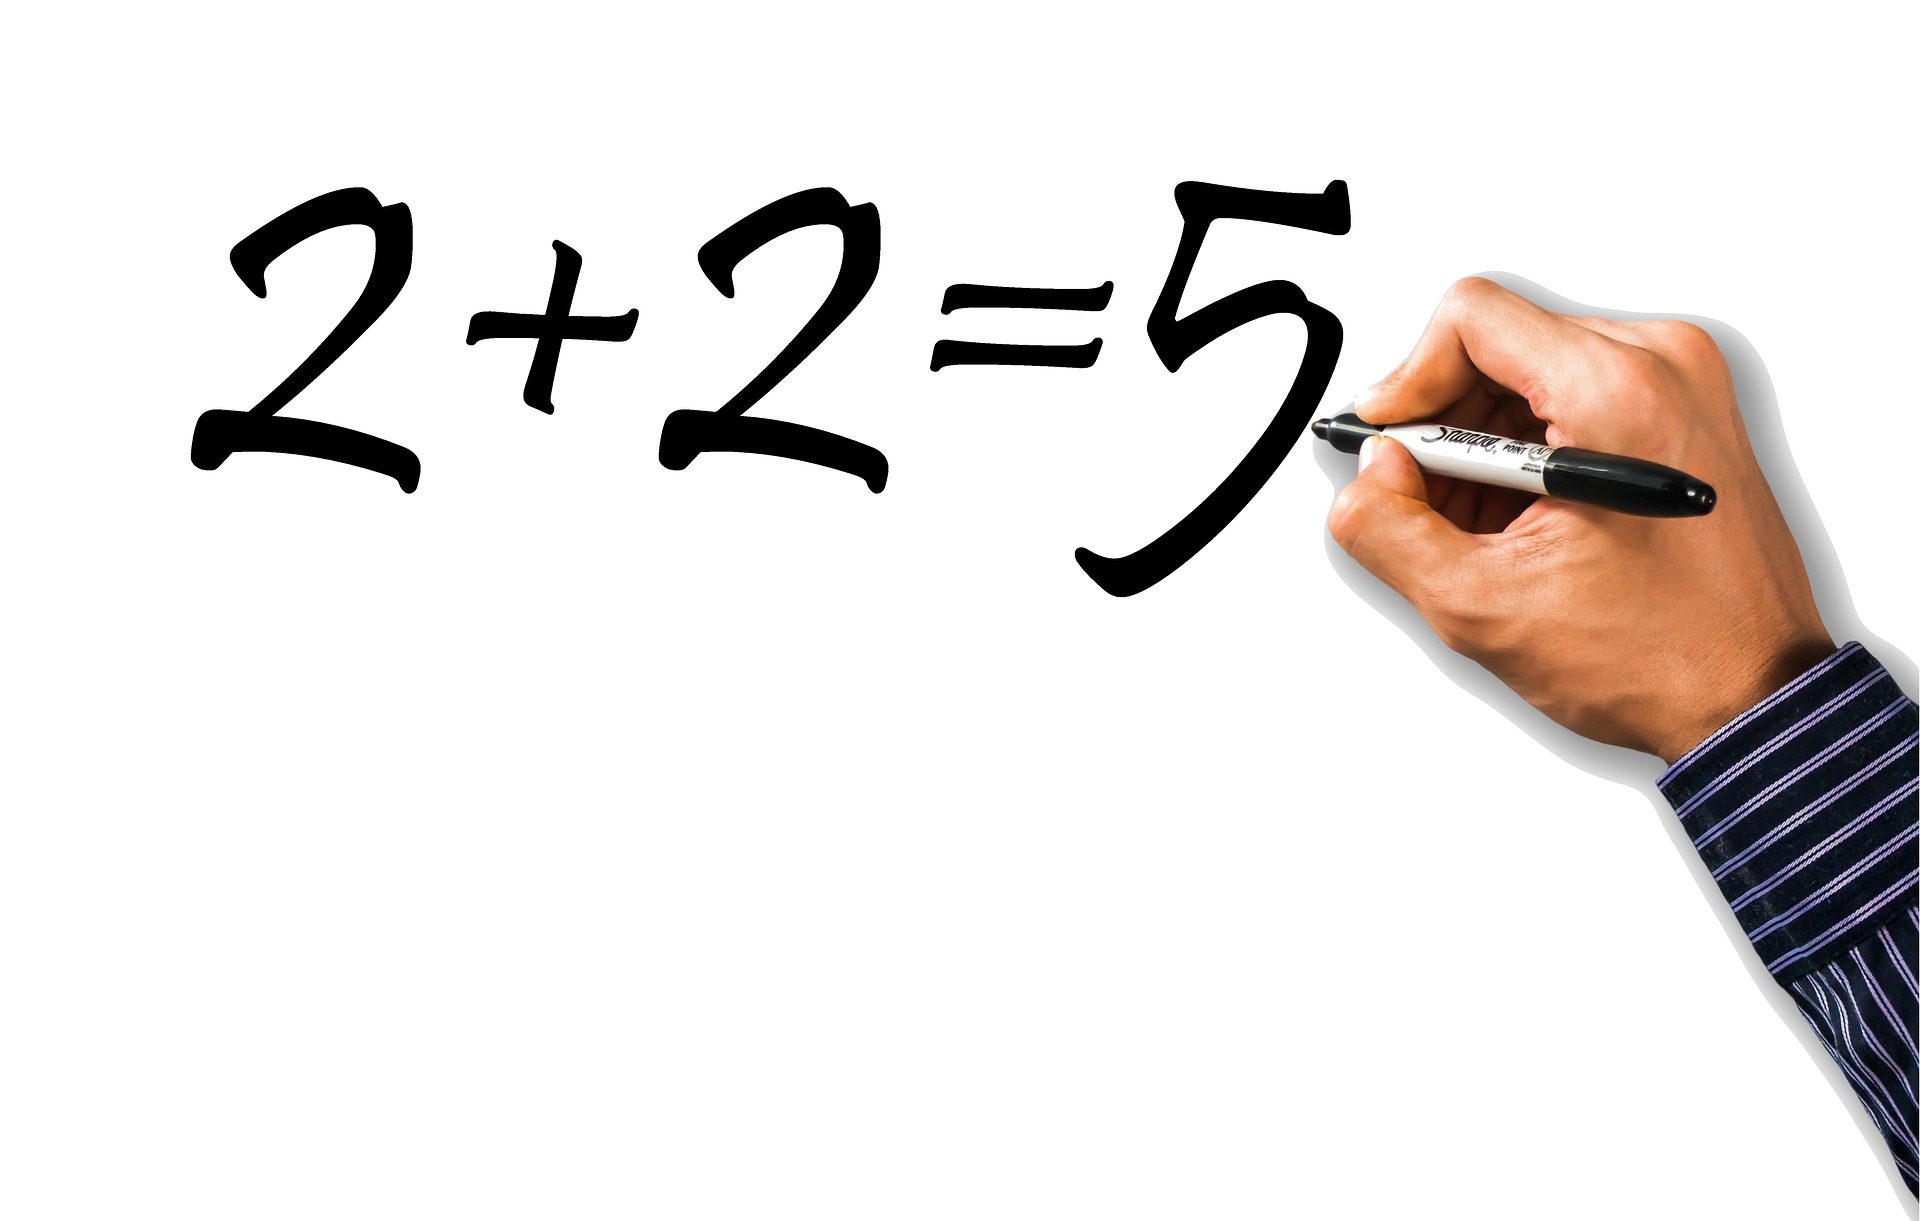 Equations. (Pixabay)